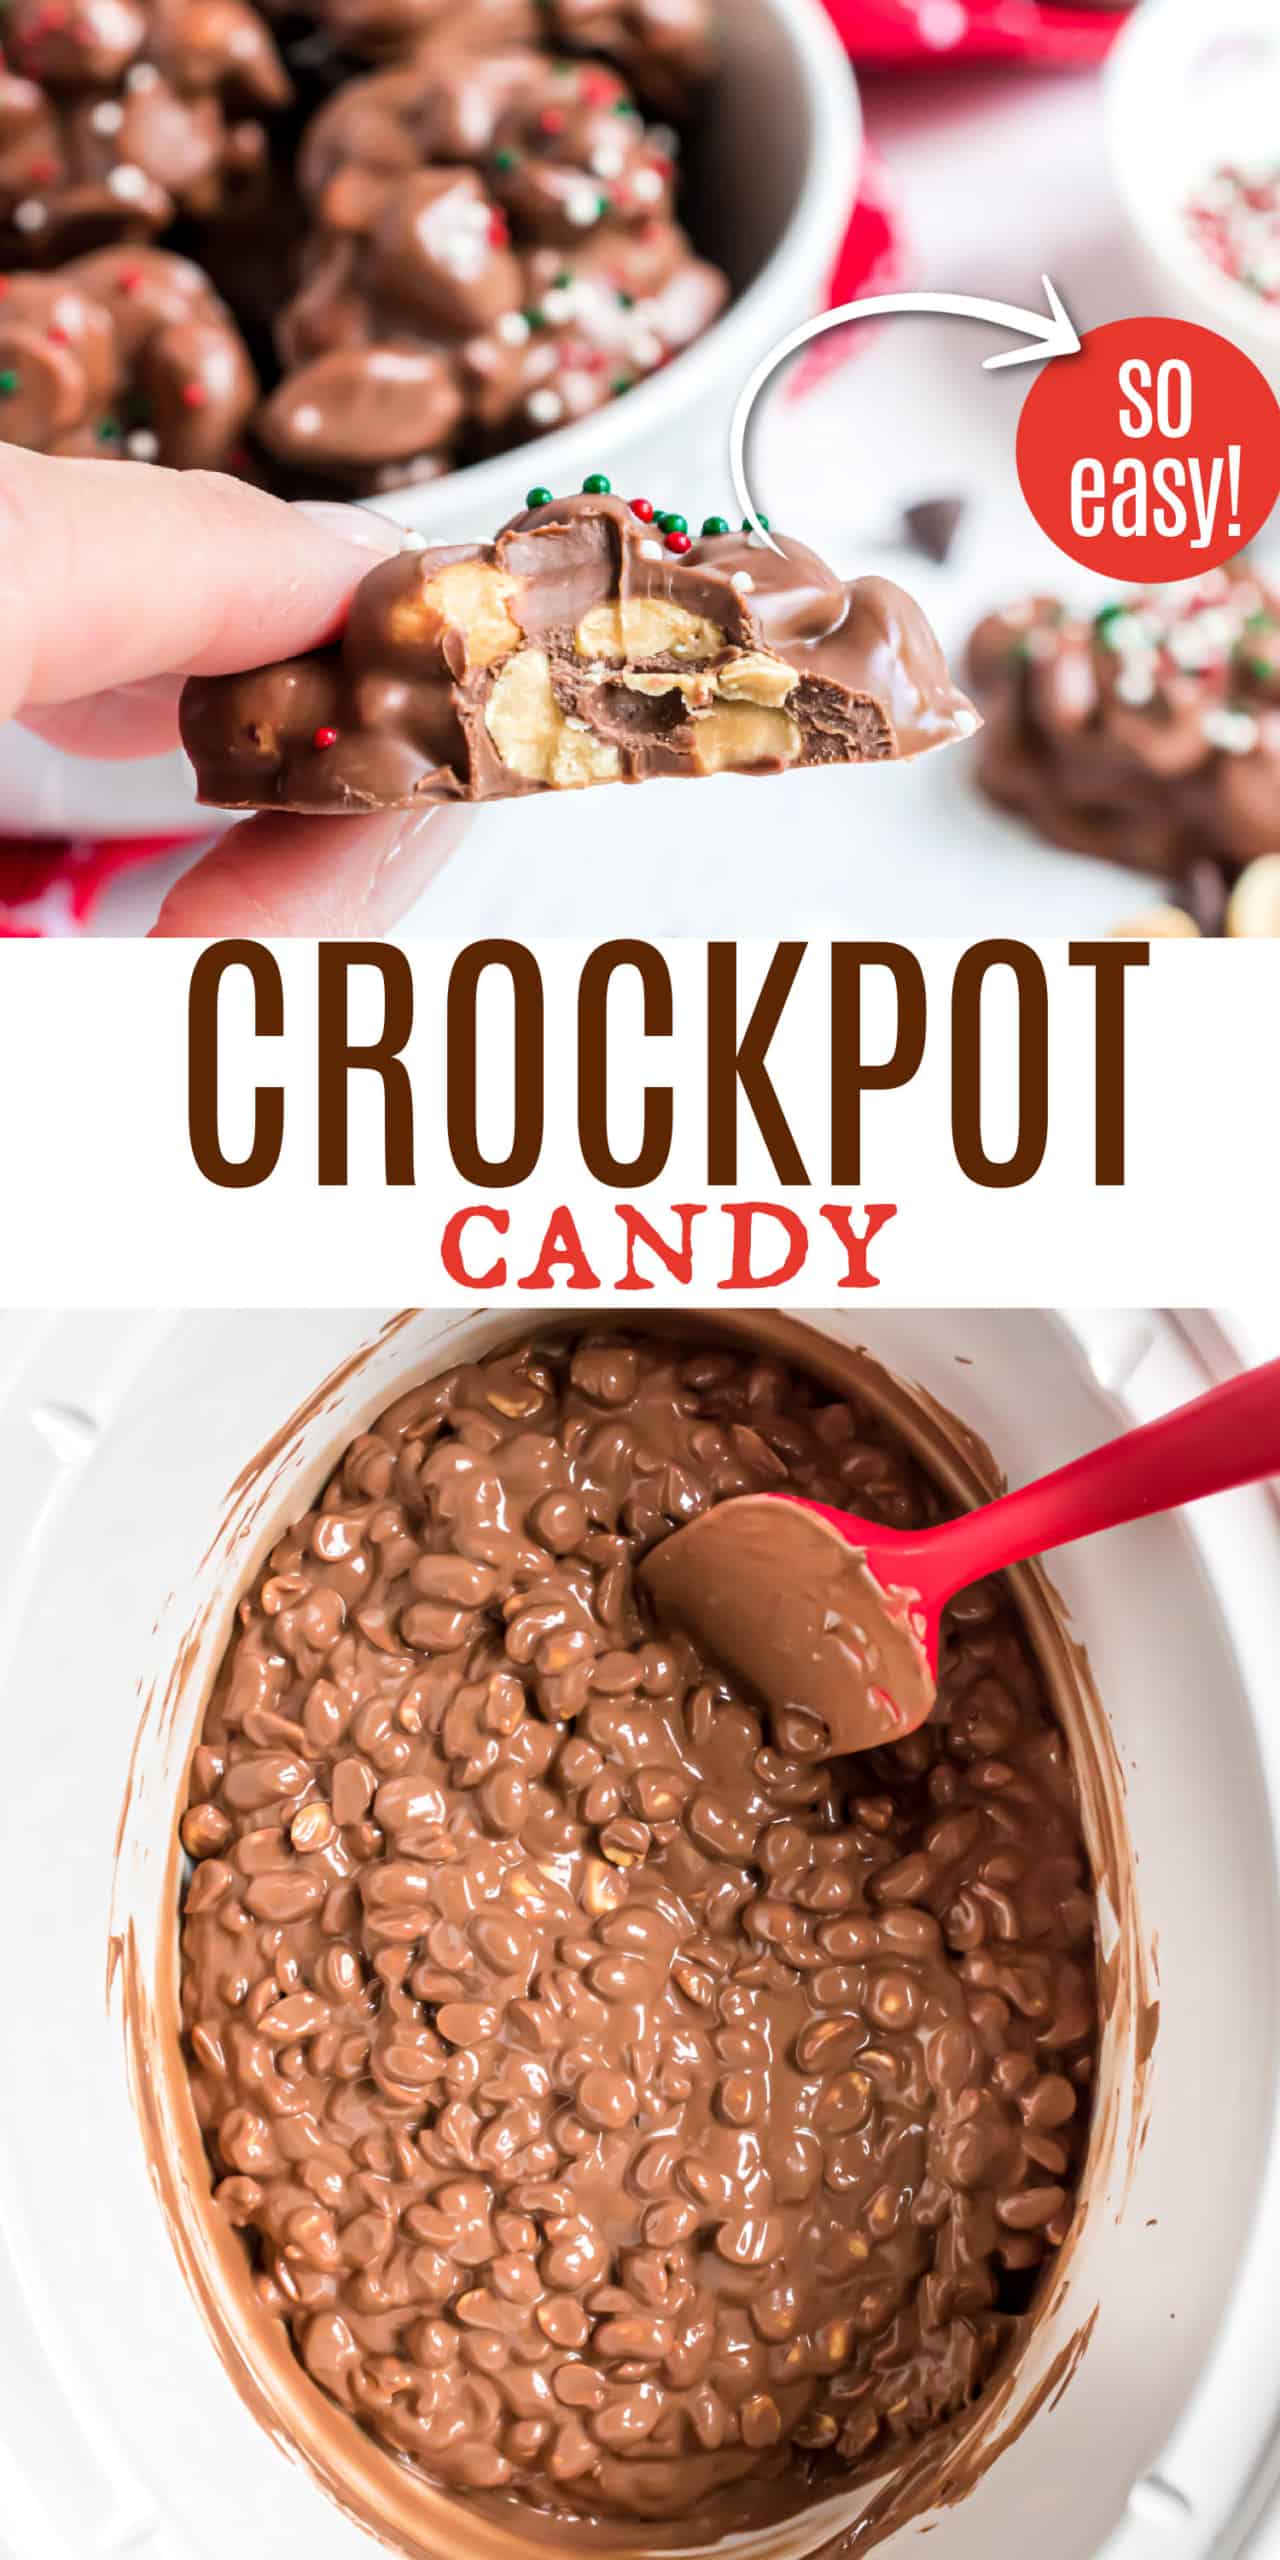 Crockpot Candy - Easy Budget Recipes